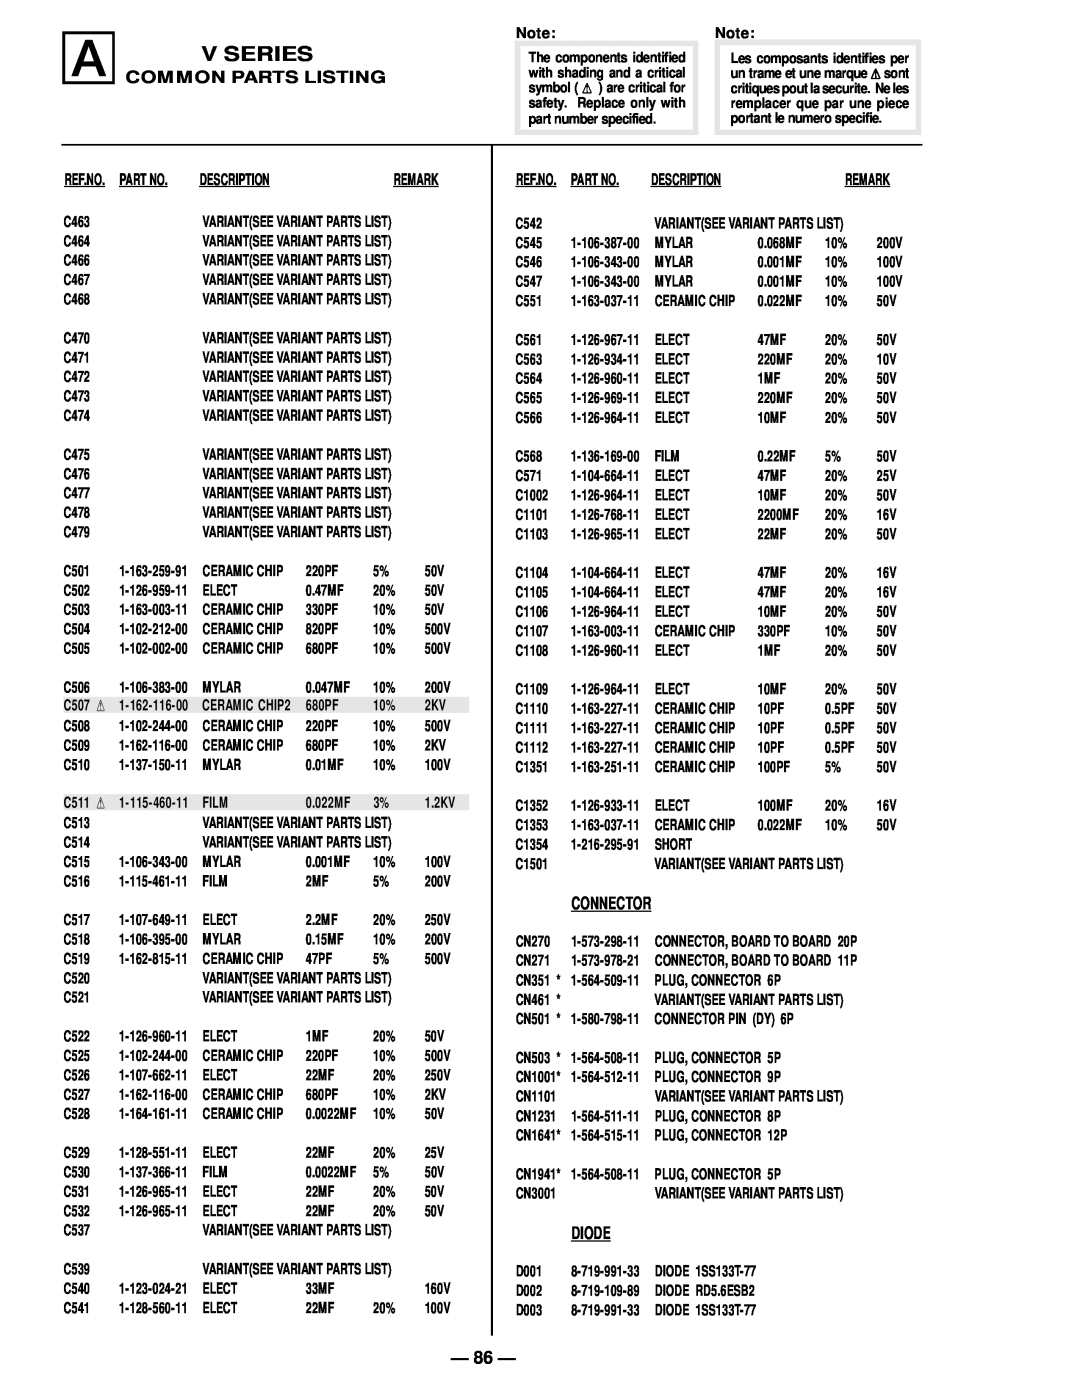 Sony KV 32S45, KV 32S40, KV 35S45, KV 32V65, KV 35S40 A V Series Common Parts Listing, Connector, Diode, Description, Remark 